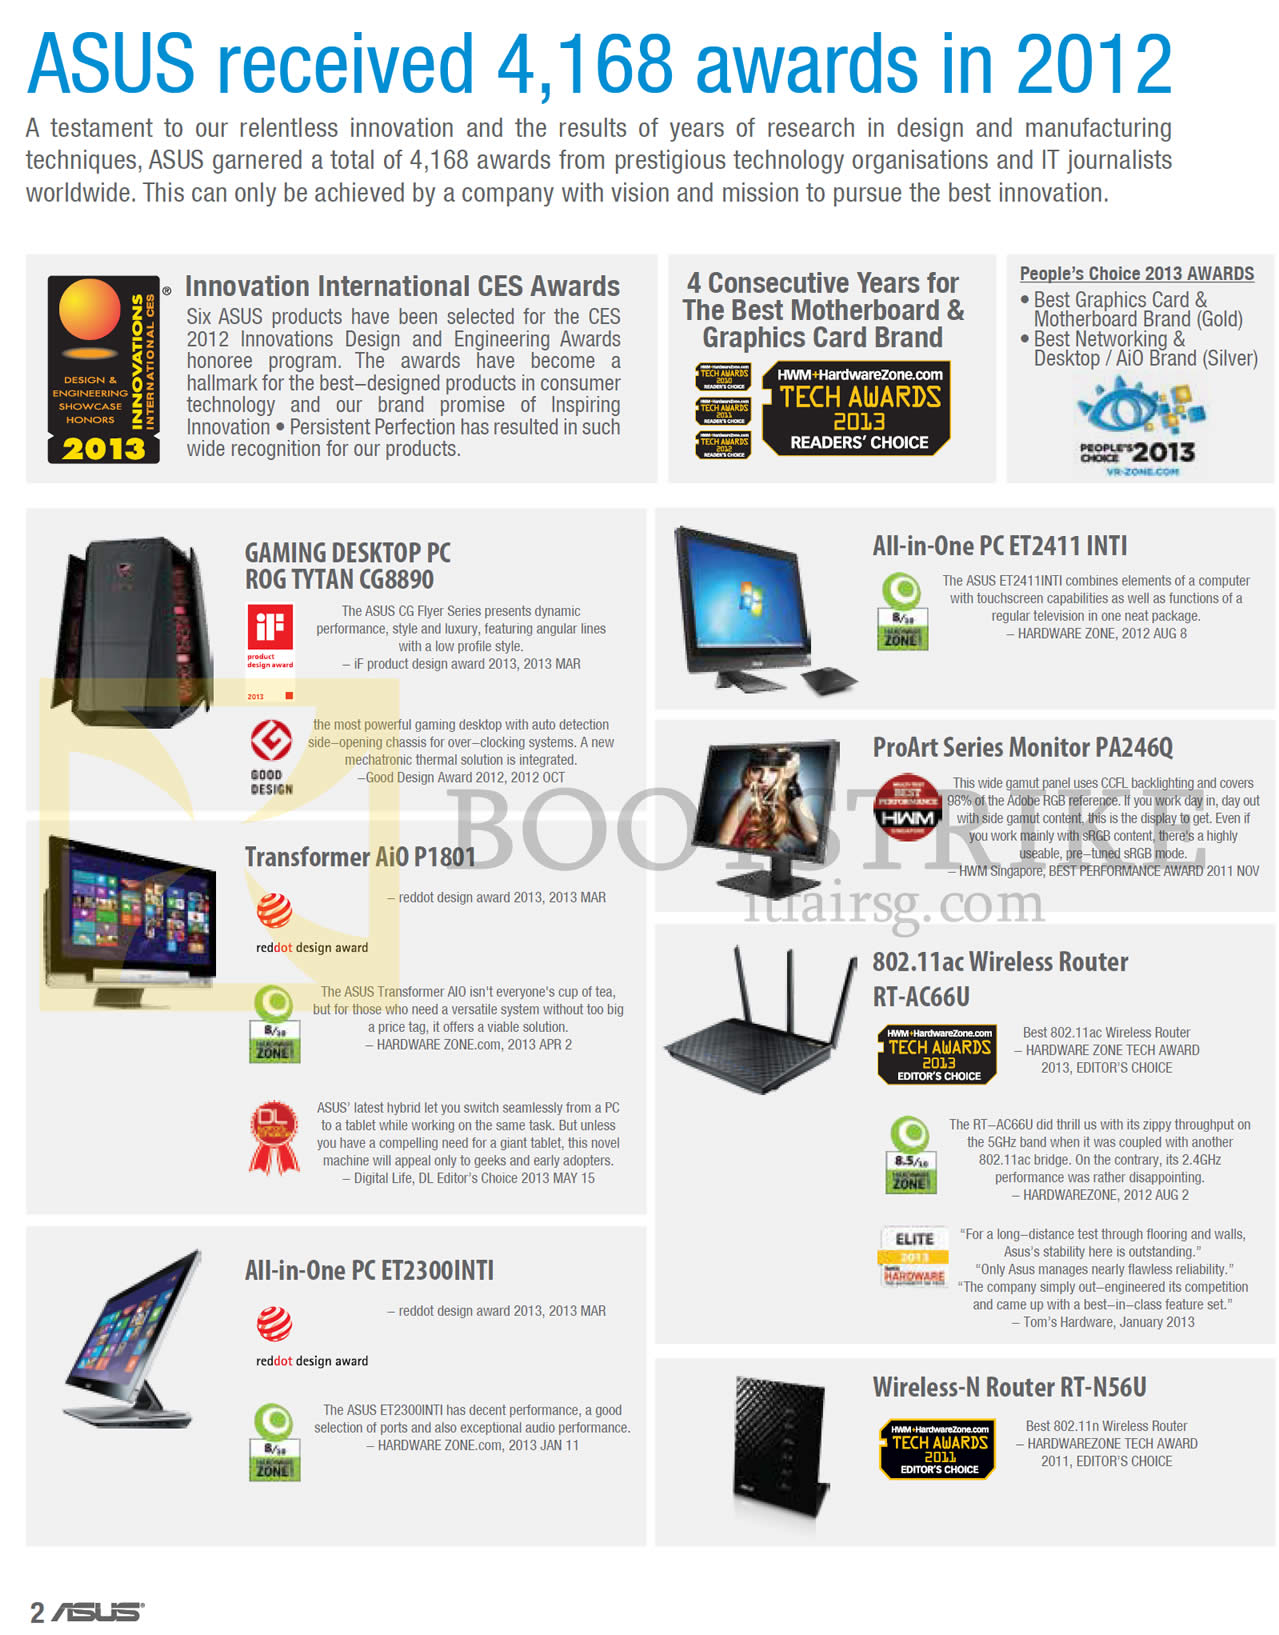 PC SHOW 2013 price list image brochure of ASUS Desktop PC ROG Tytan CG8890, Transformer AIO P1801, AIO PC ET2300INTI, AIO PC ET2411 INTI, ProArt Monitor PA246Q, Wireless Router RT-AC66U, RT-N56U